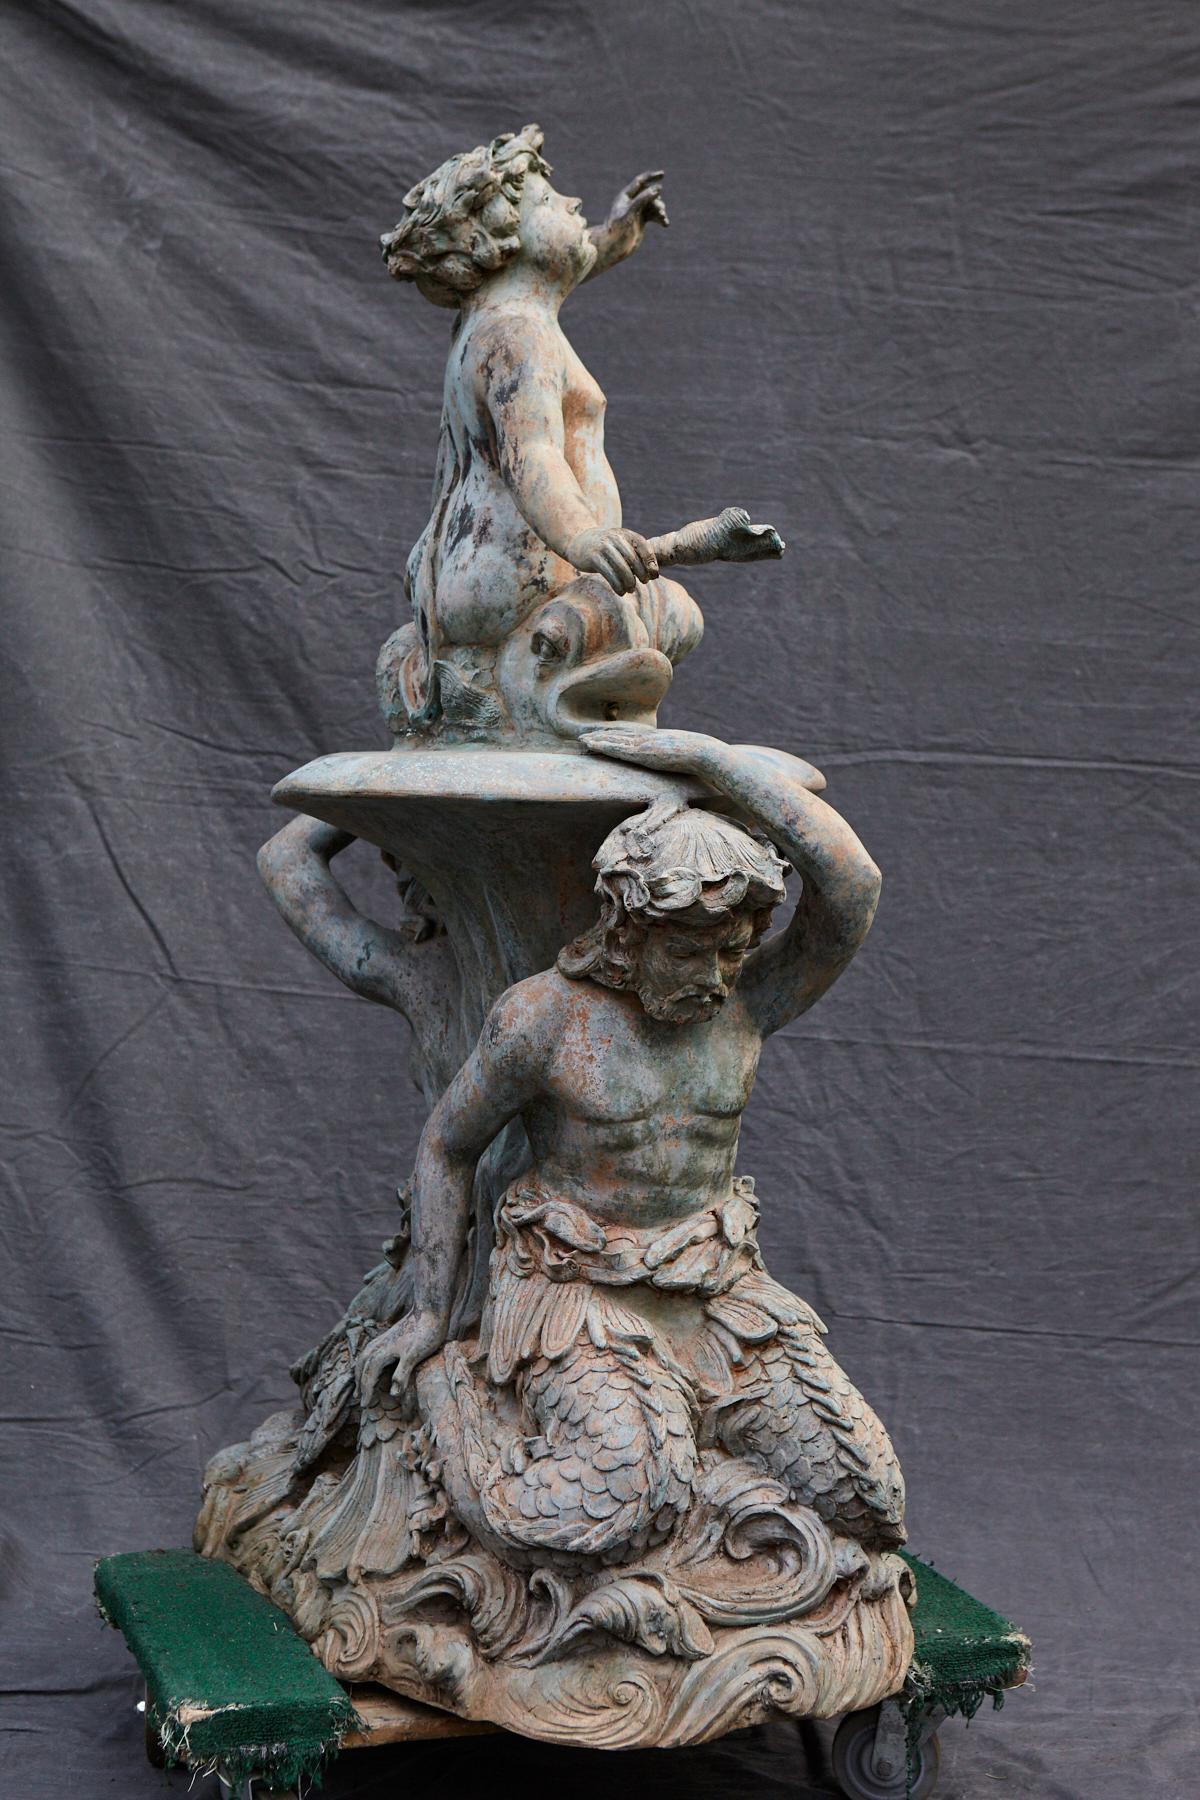 merman statue